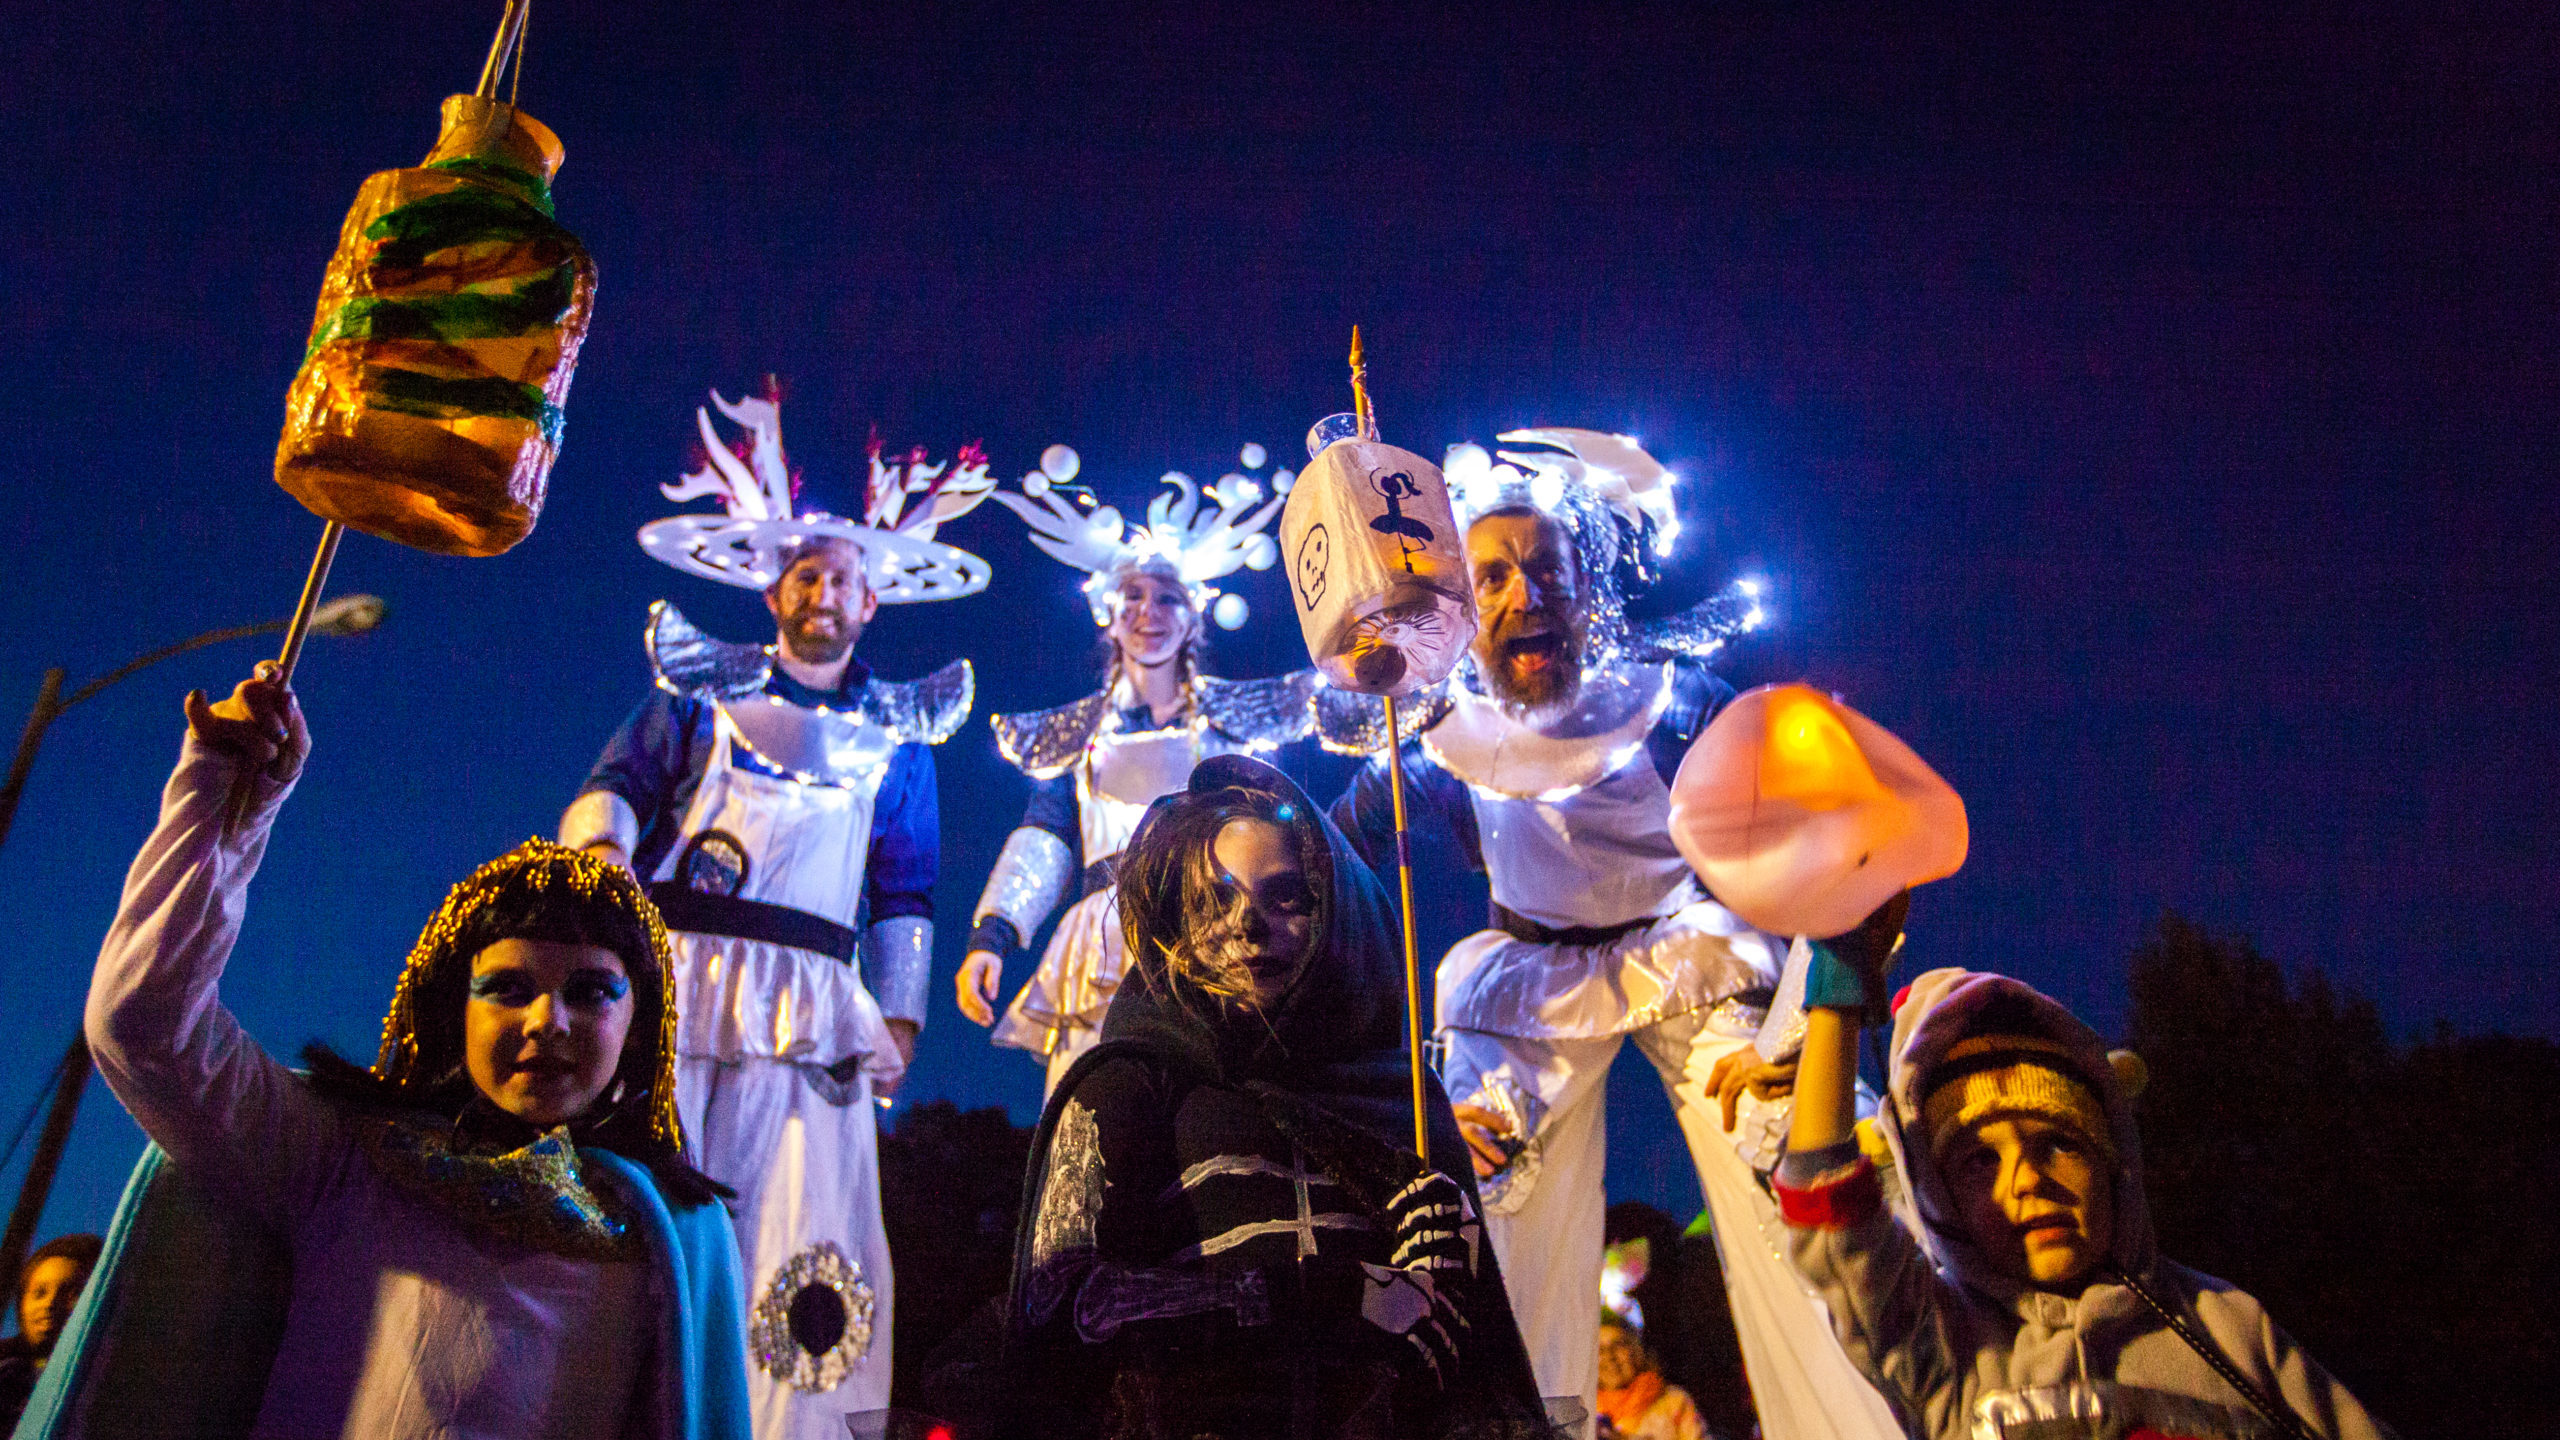 Creative Alliance | Halloween costumes and lanterns